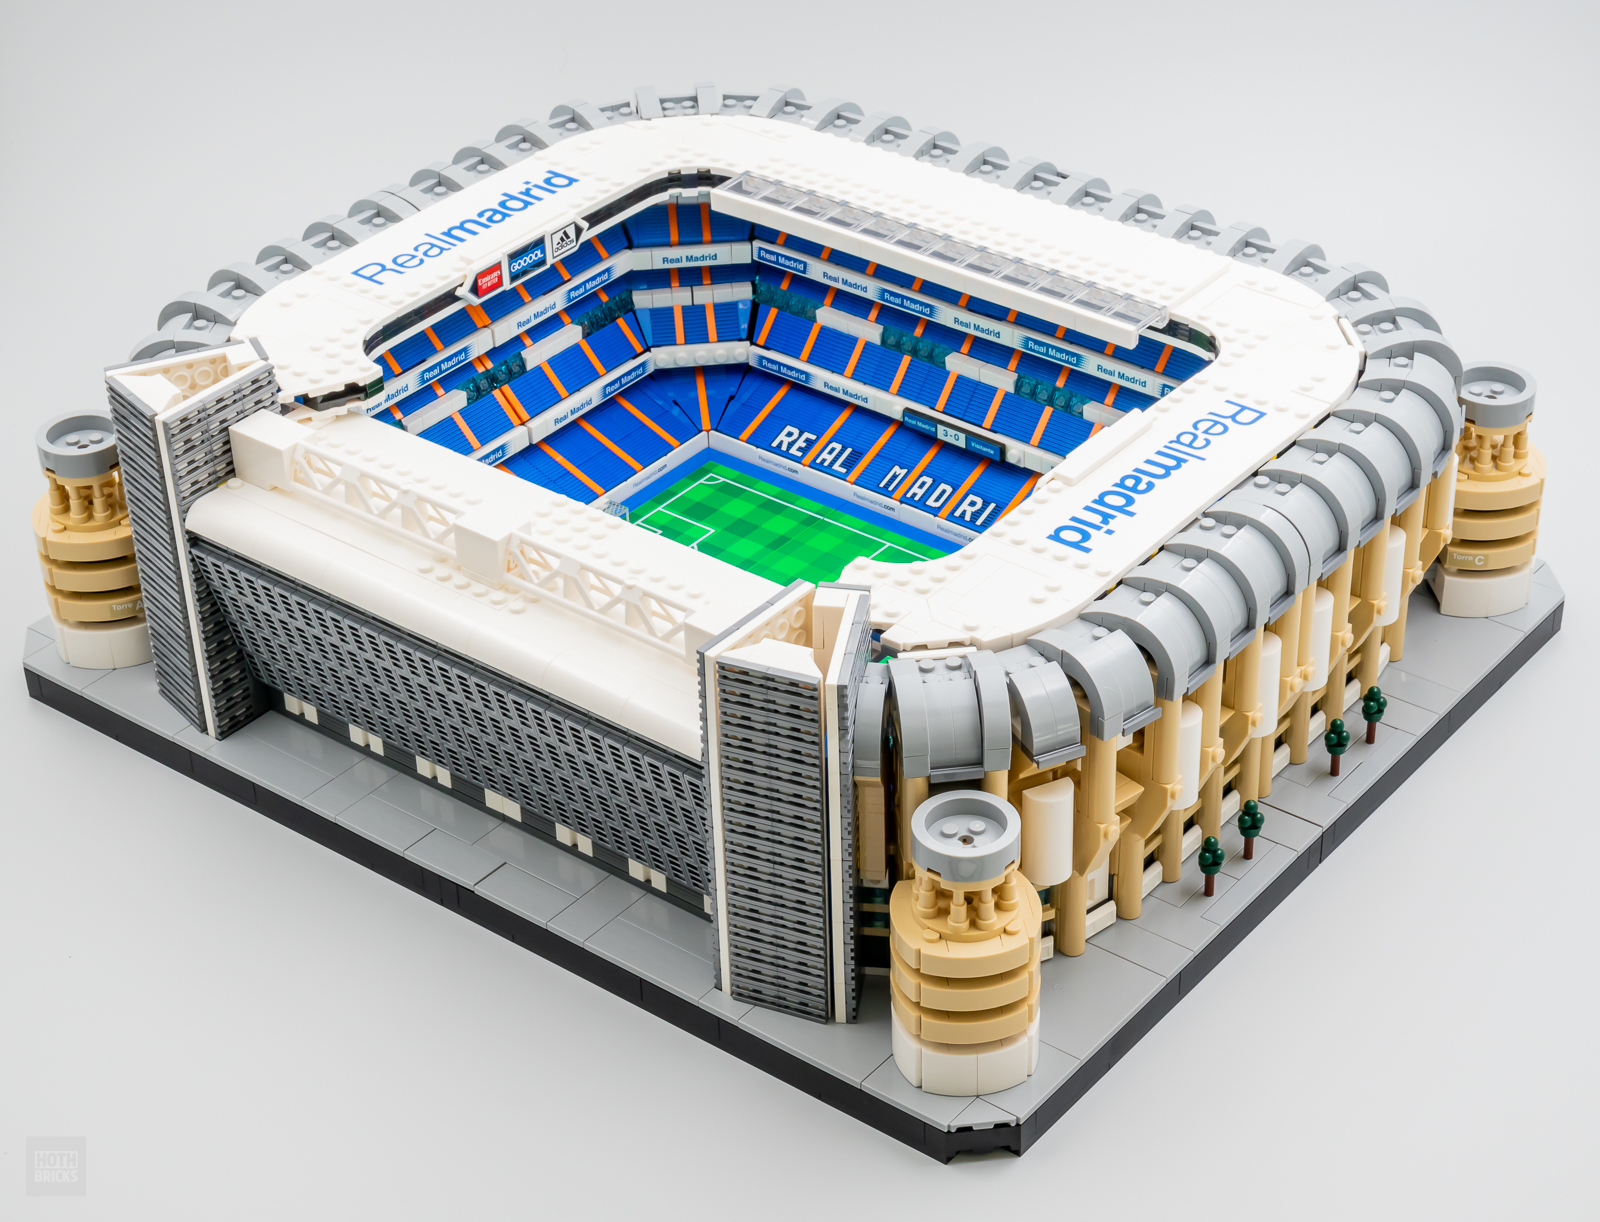 LEGO Real Madrid stadium set gets Black Friday price cut